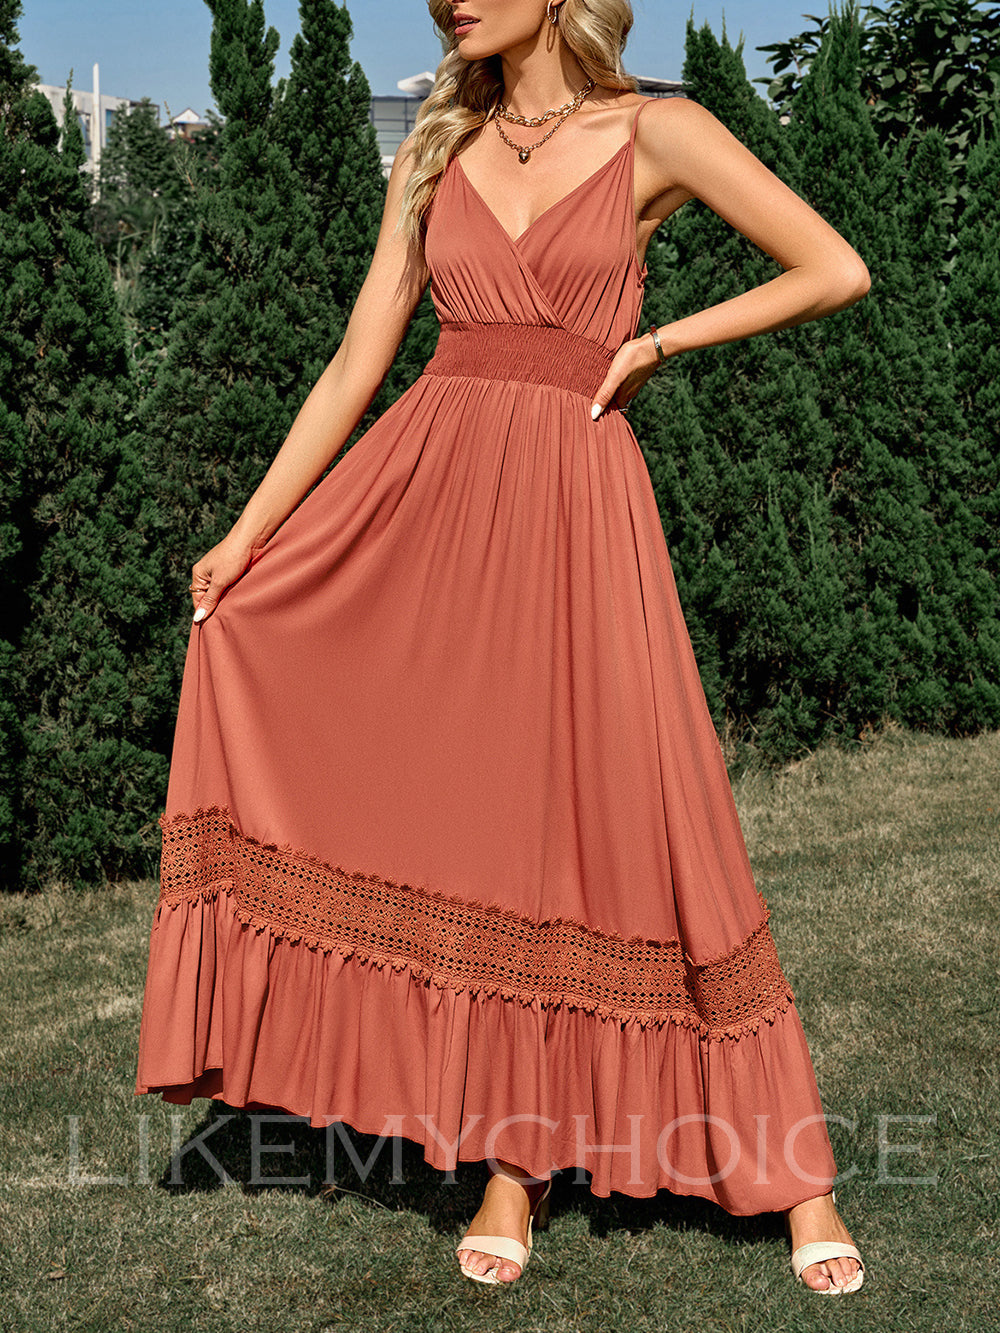 Classic Chic Smocked Dress